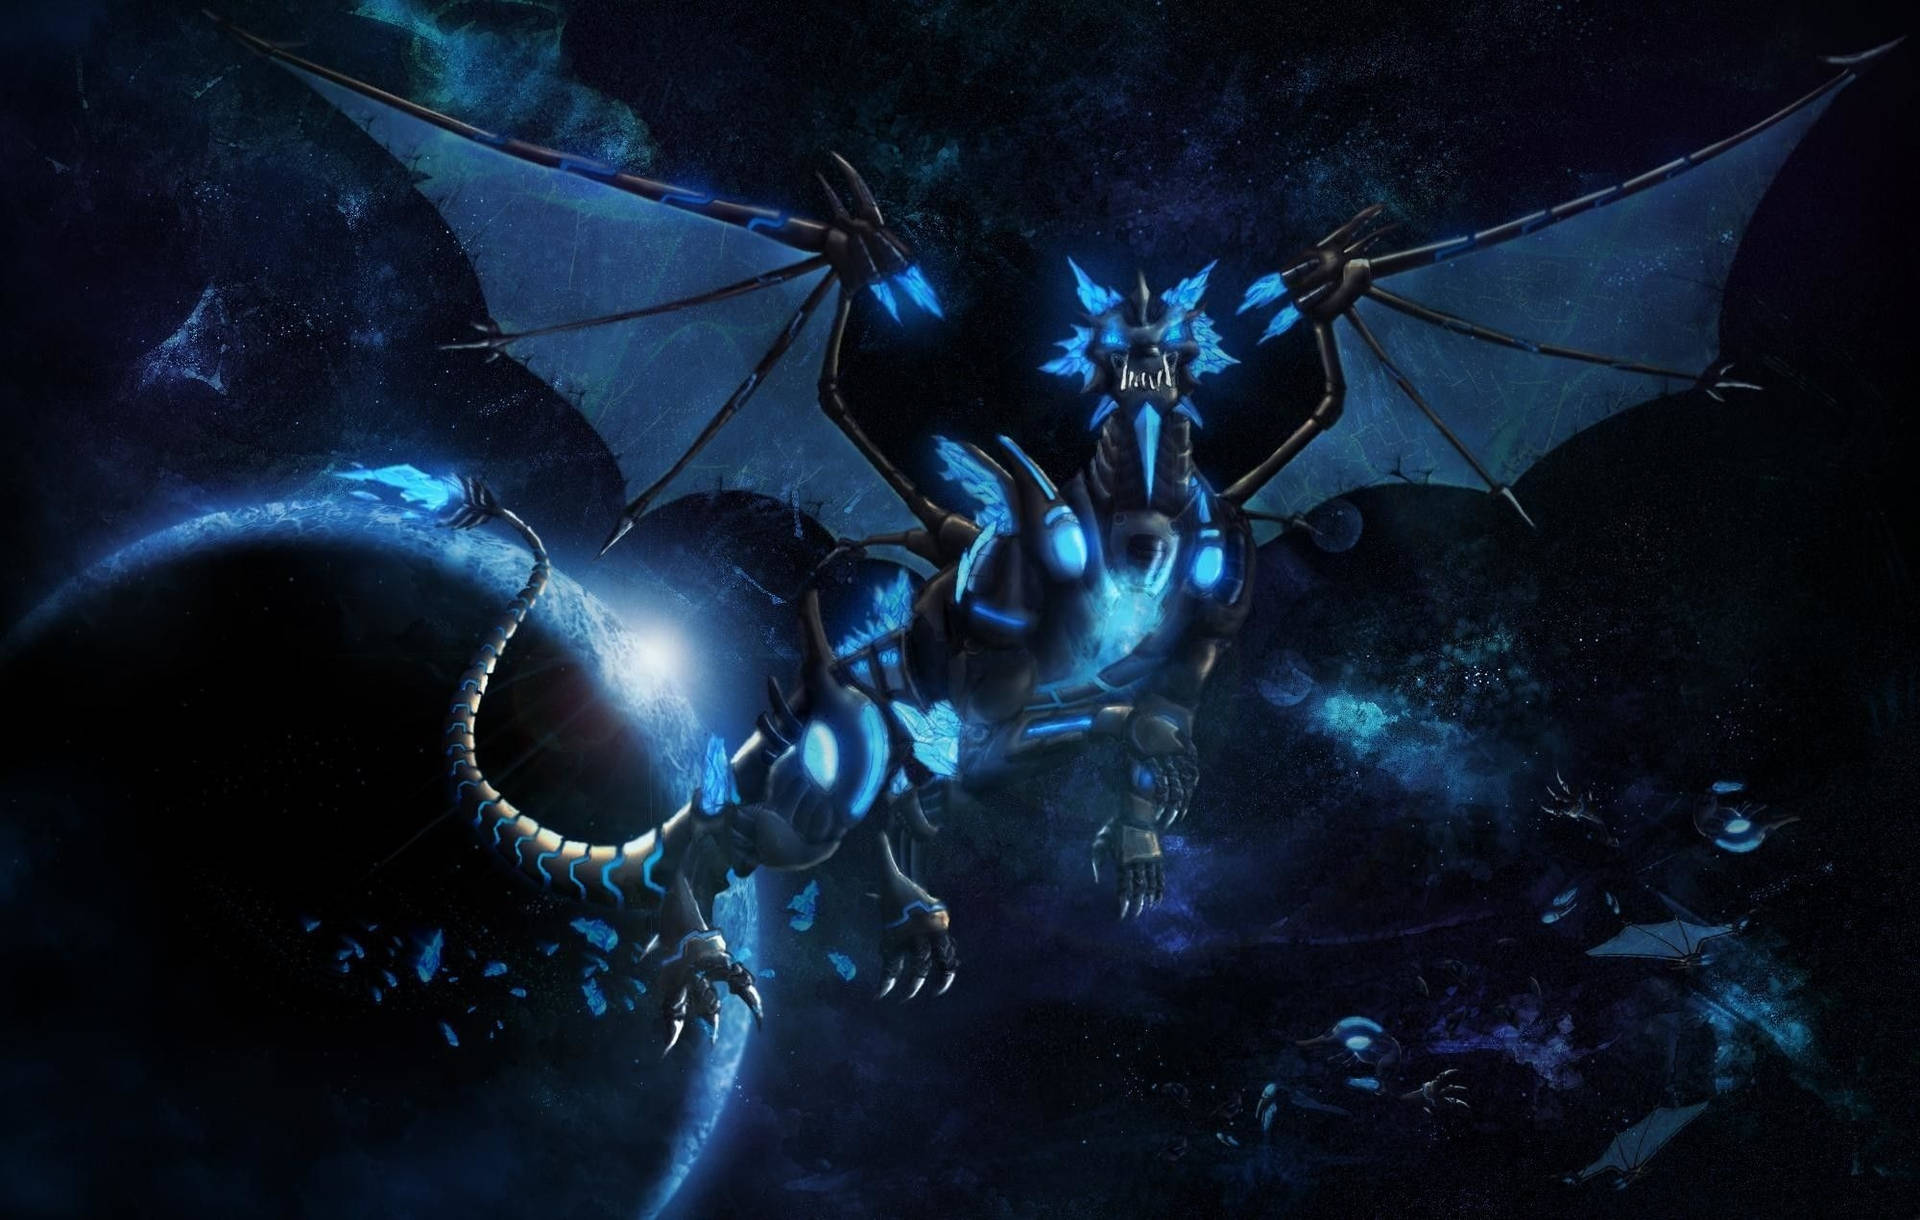 "A mighty dragon against an alien backdrop" Wallpaper